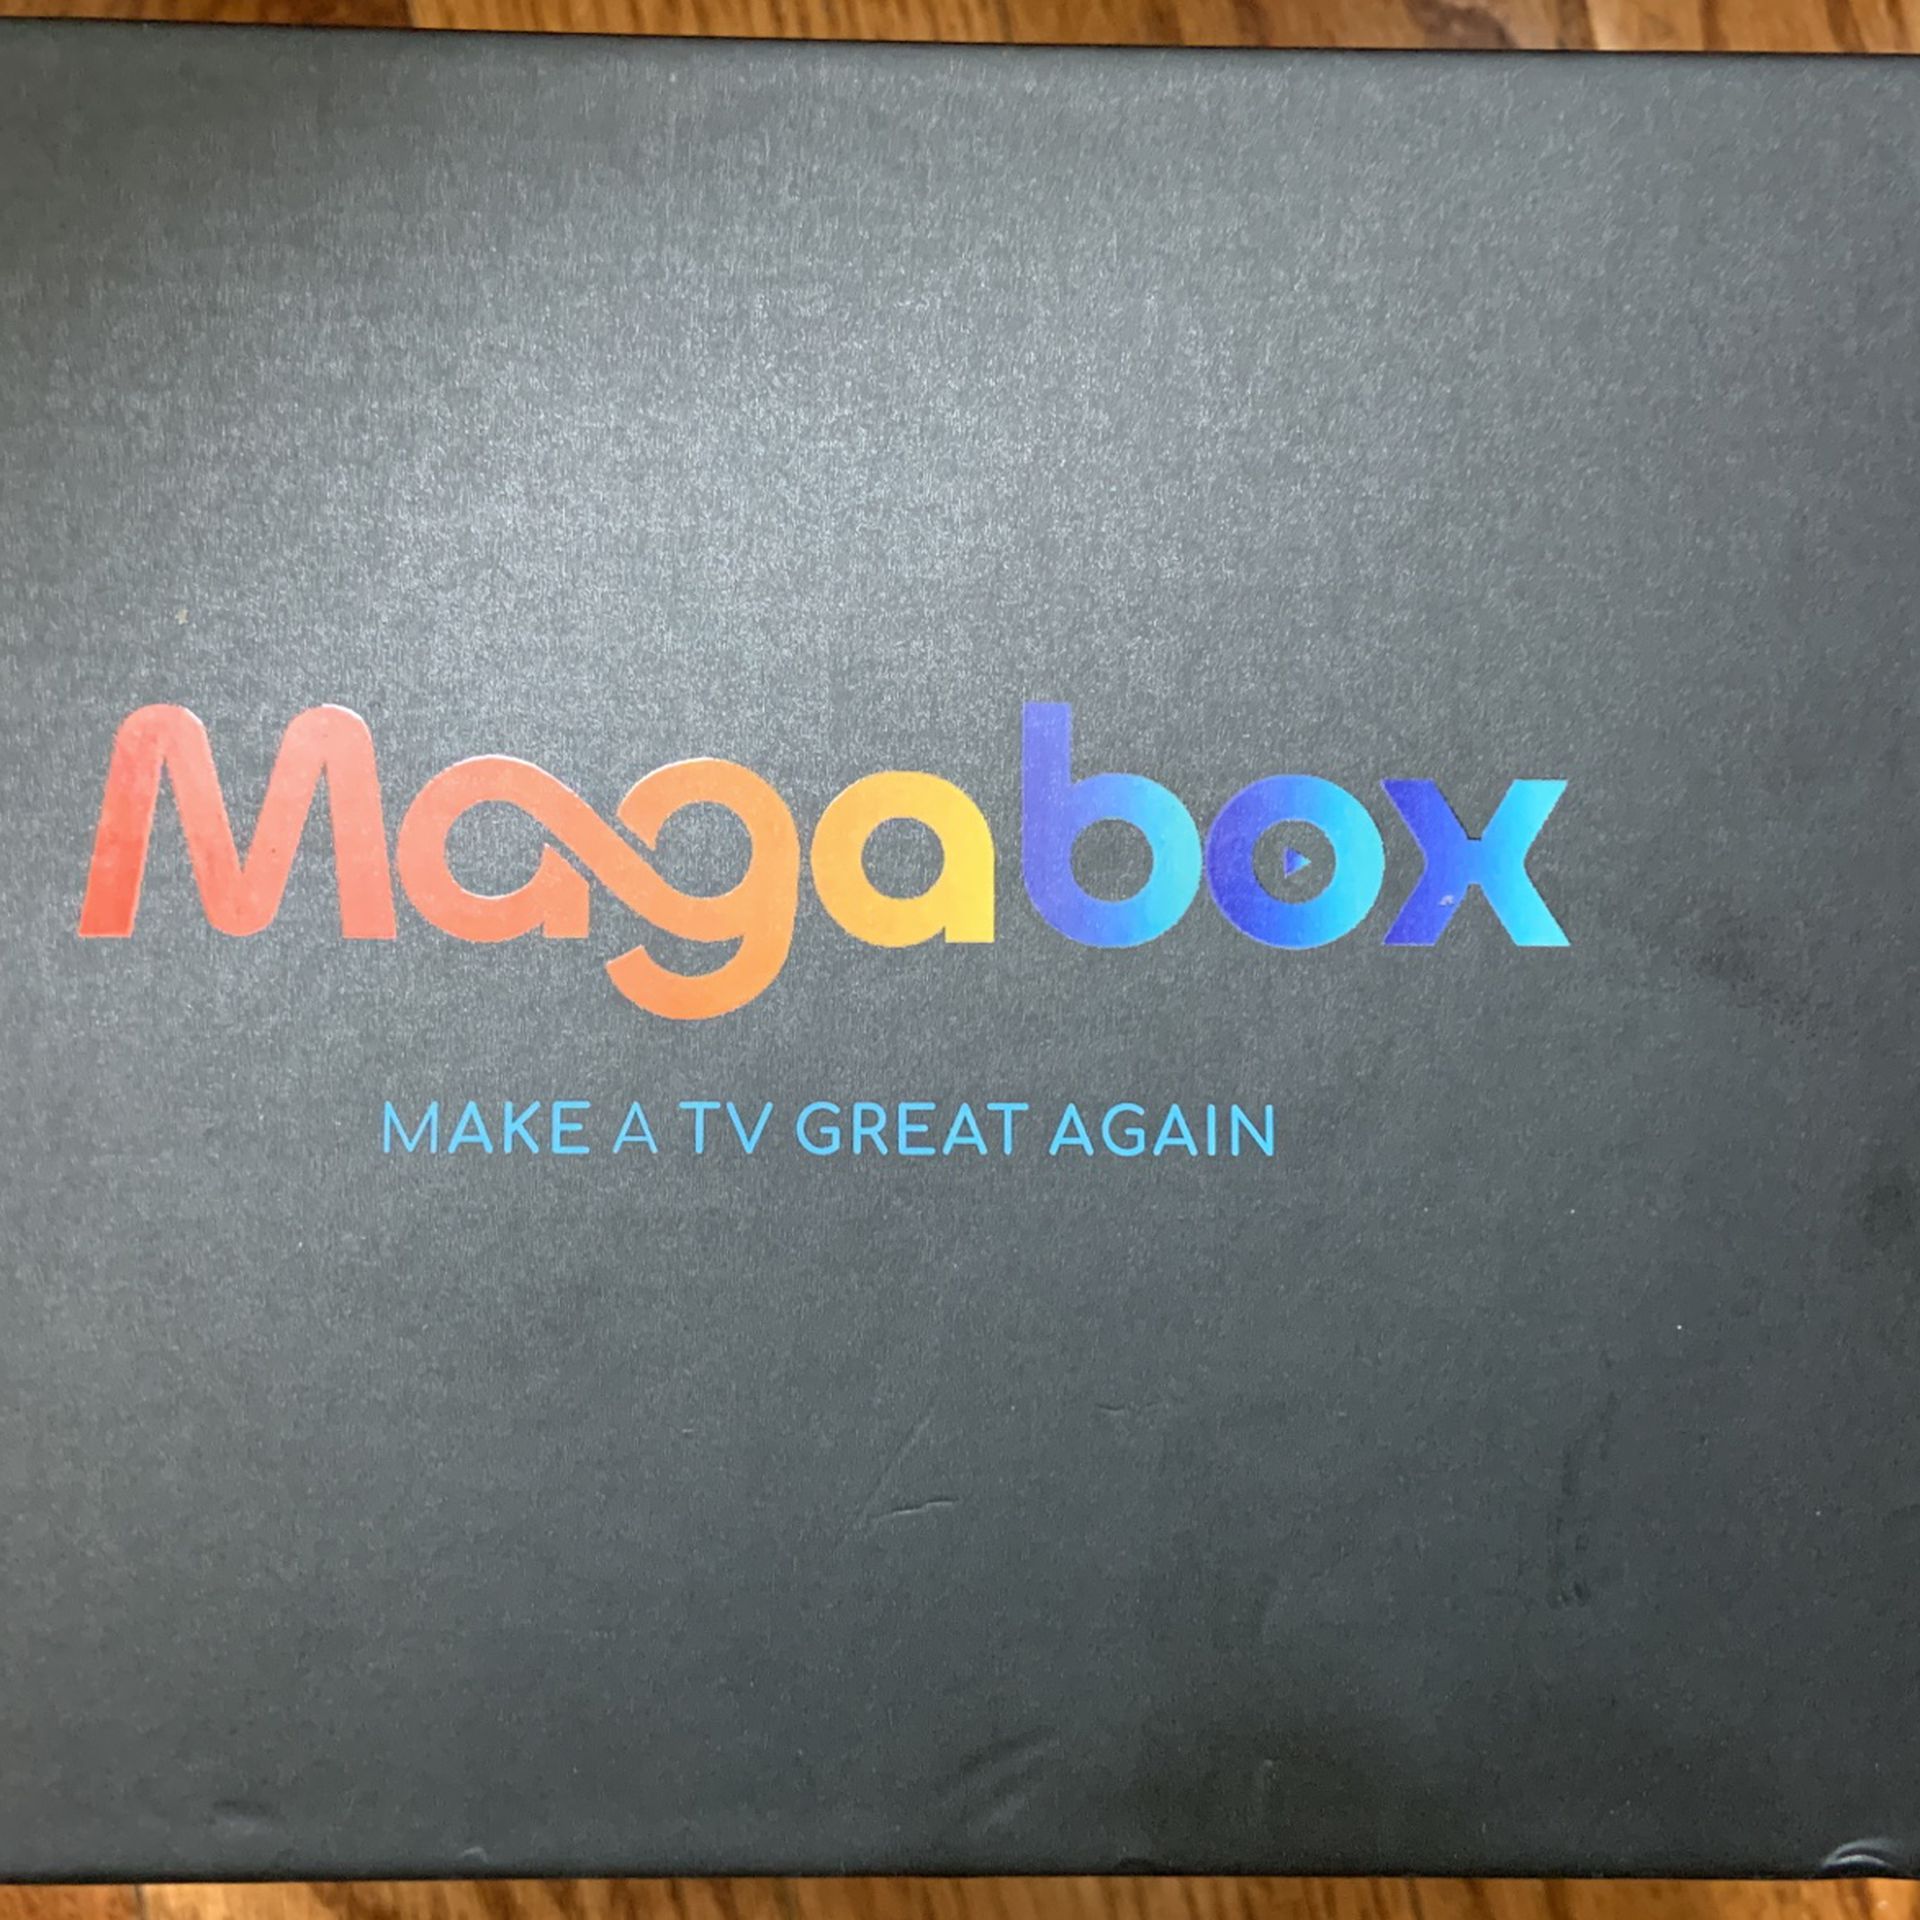 The New Megabox  $225